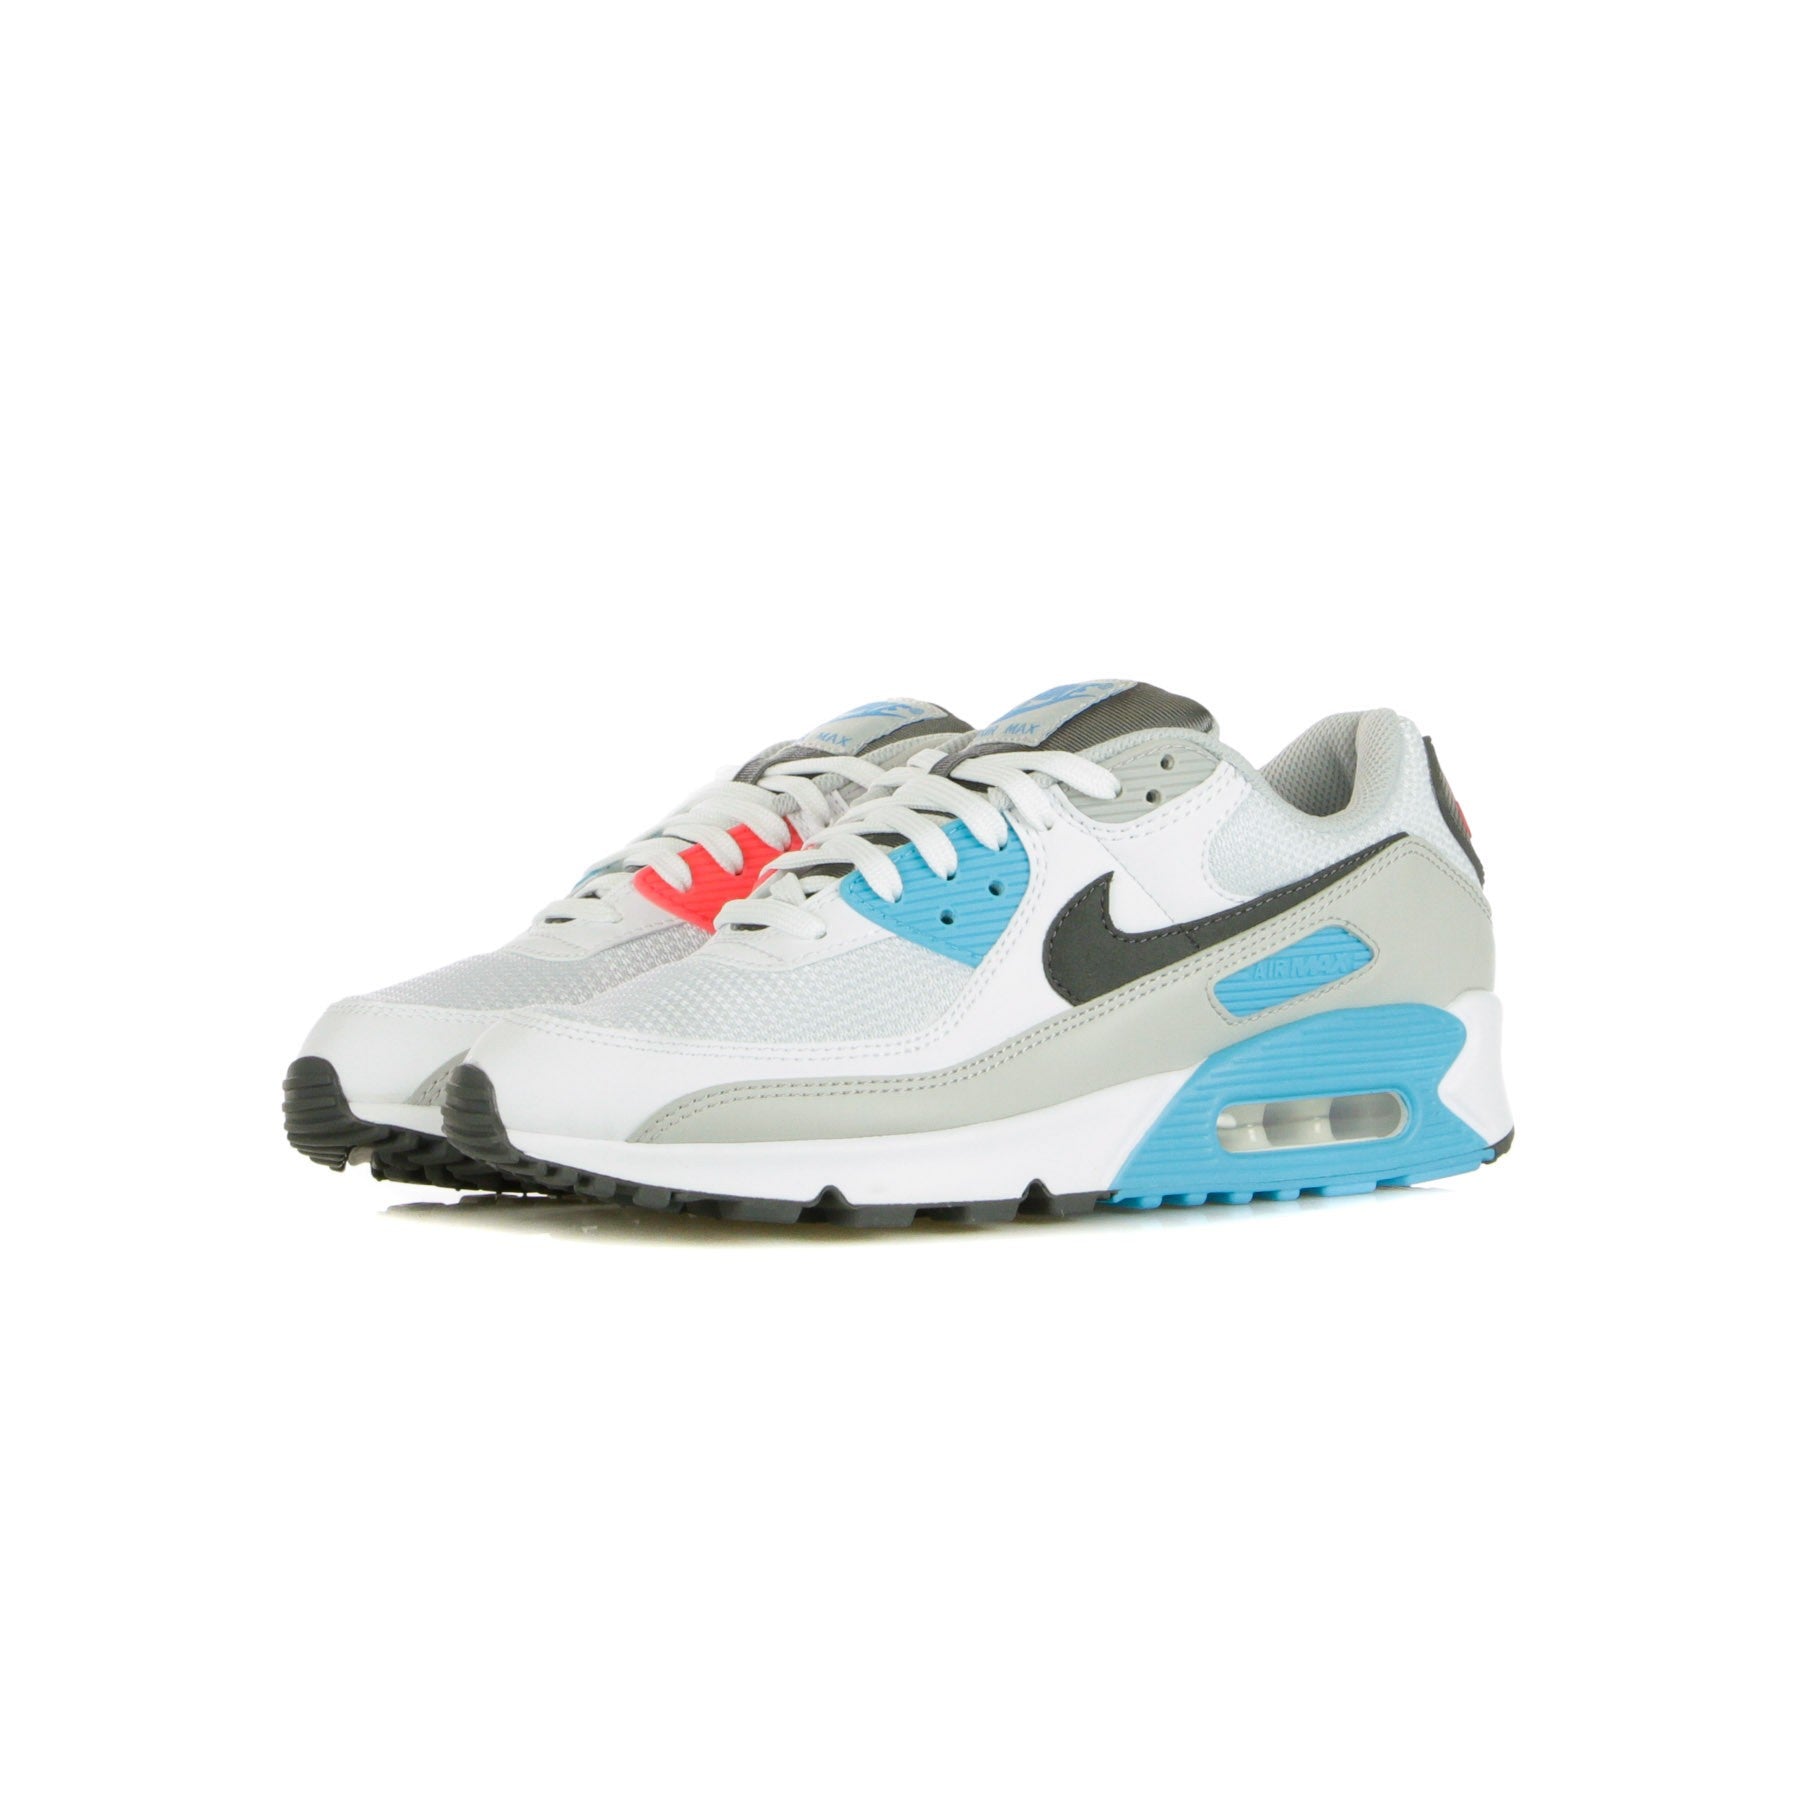 Air Max 90 White/iron Grey/chlorine Blue Men's Low Shoe